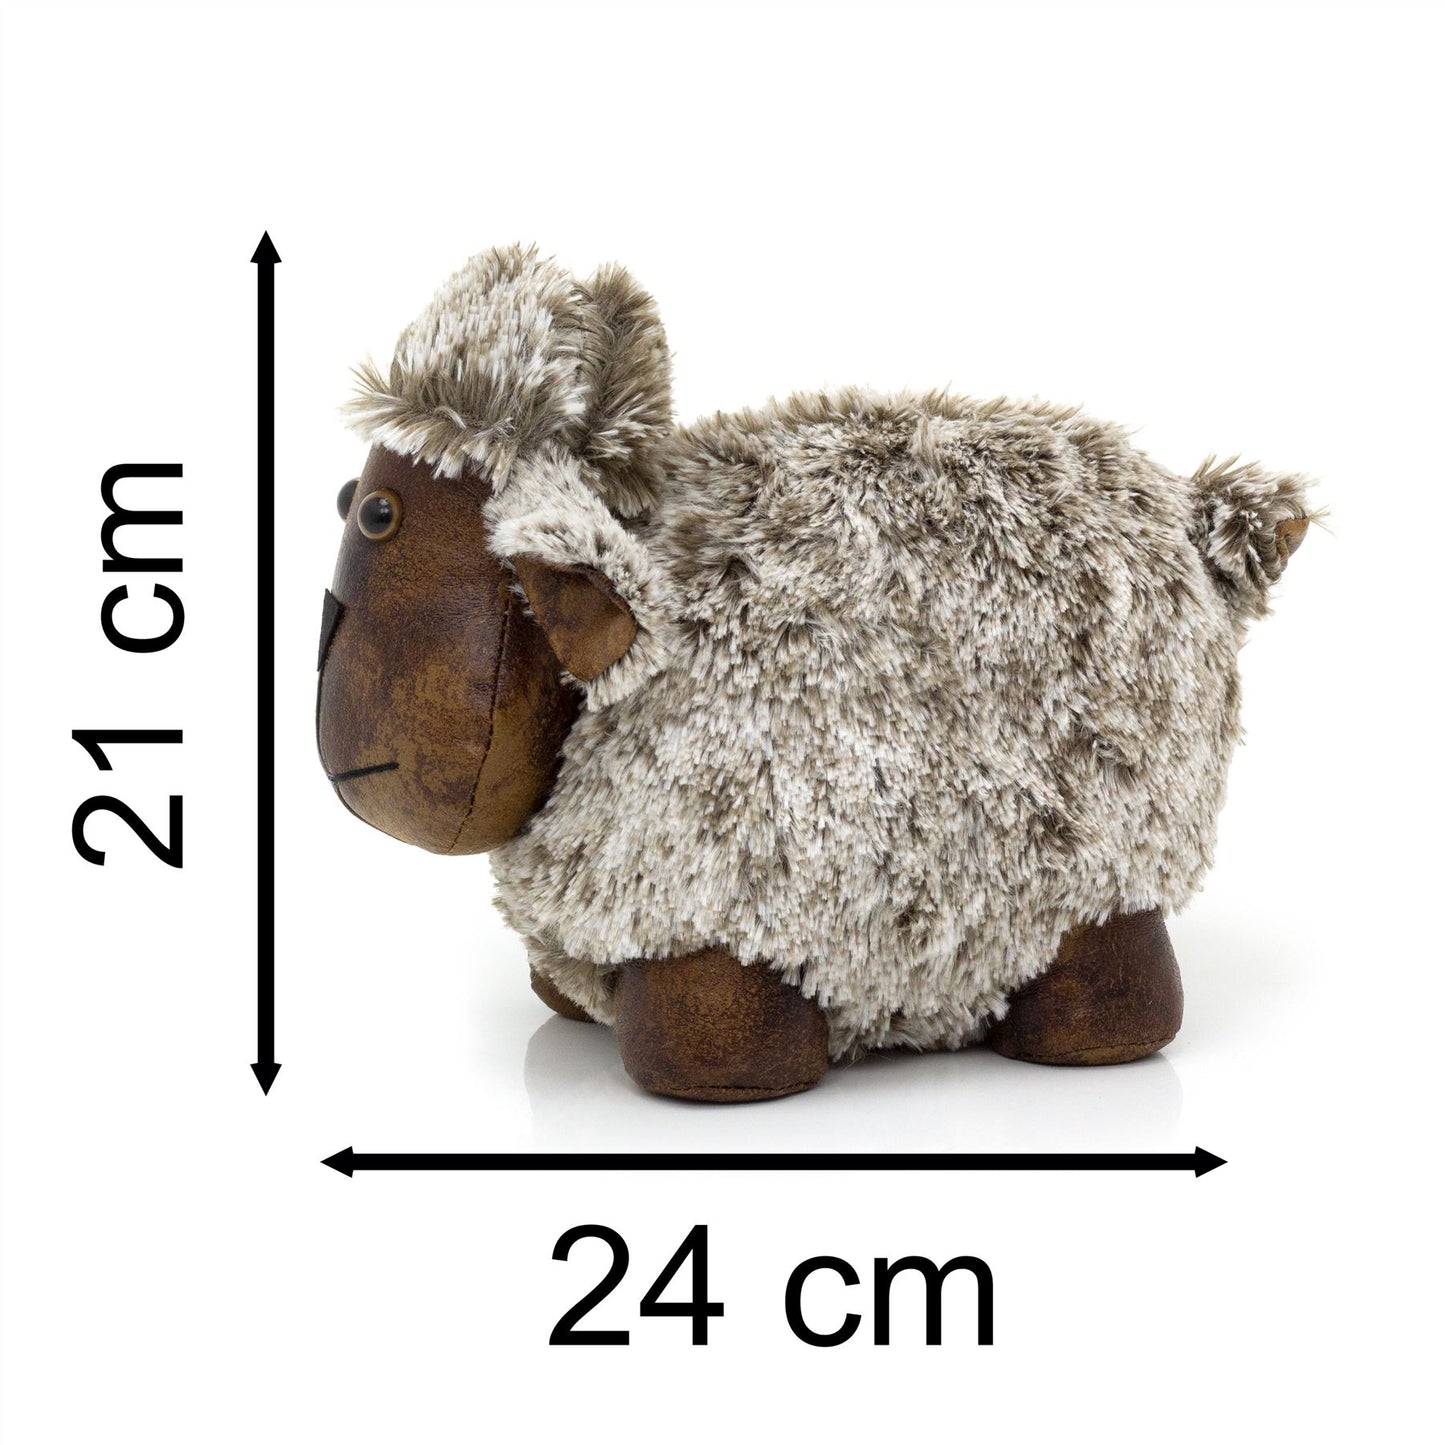 Beau Sheep Doorstop | Faux Leather Weighted Lamb Sheep Animal Door Stop 1.7kg